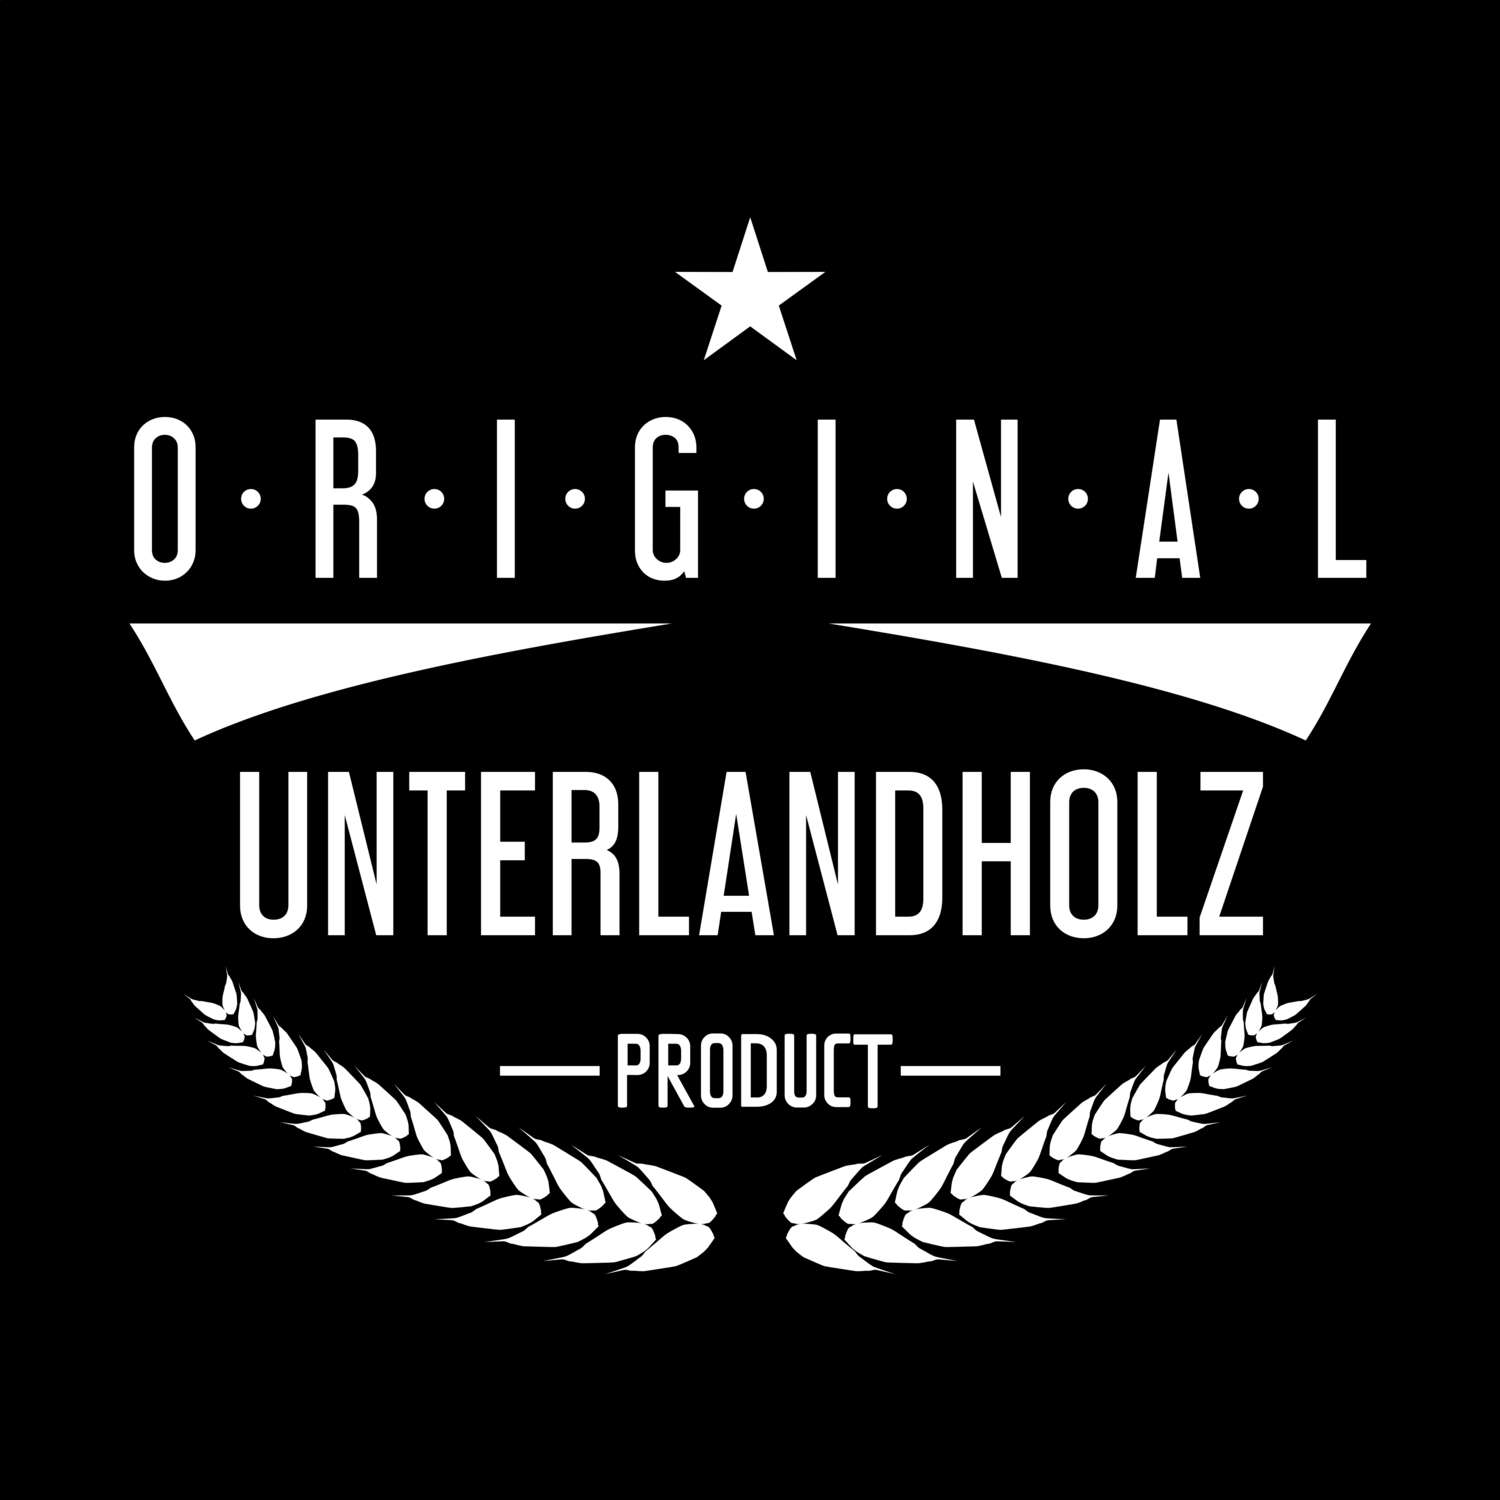 Unterlandholz T-Shirt »Original Product«